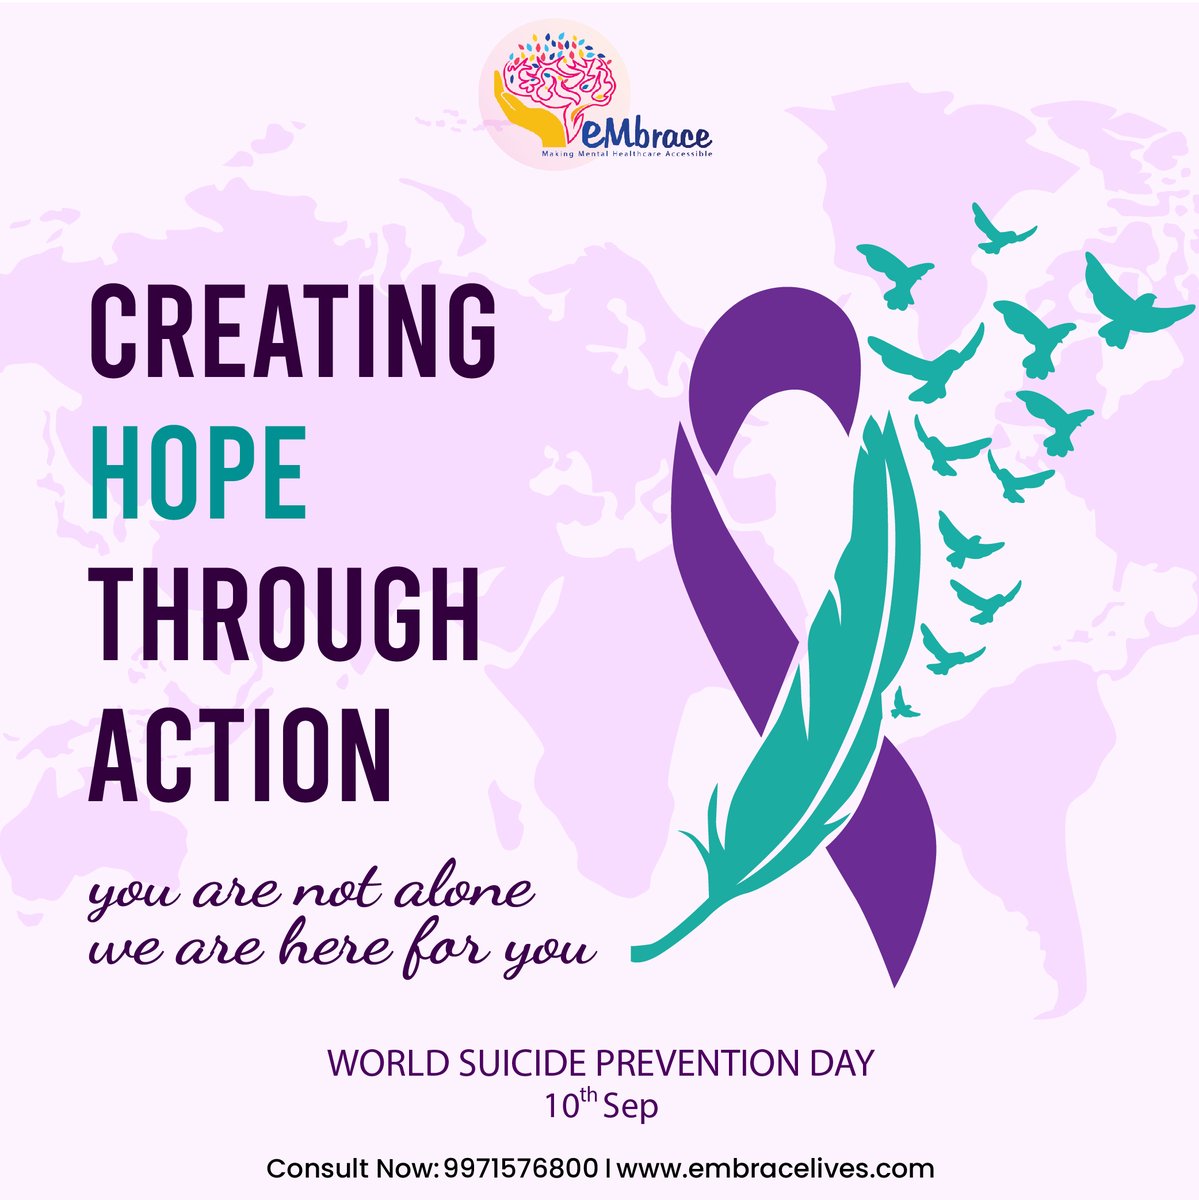 '🌟 Creating Hope Through Action 🌟

Together, we can light up the darkness.
embracelives.com

💛 #WorldSuicidePreventionDay #MentalHealthMatters #hope #help #awareness #suicide #eMbracelives #india